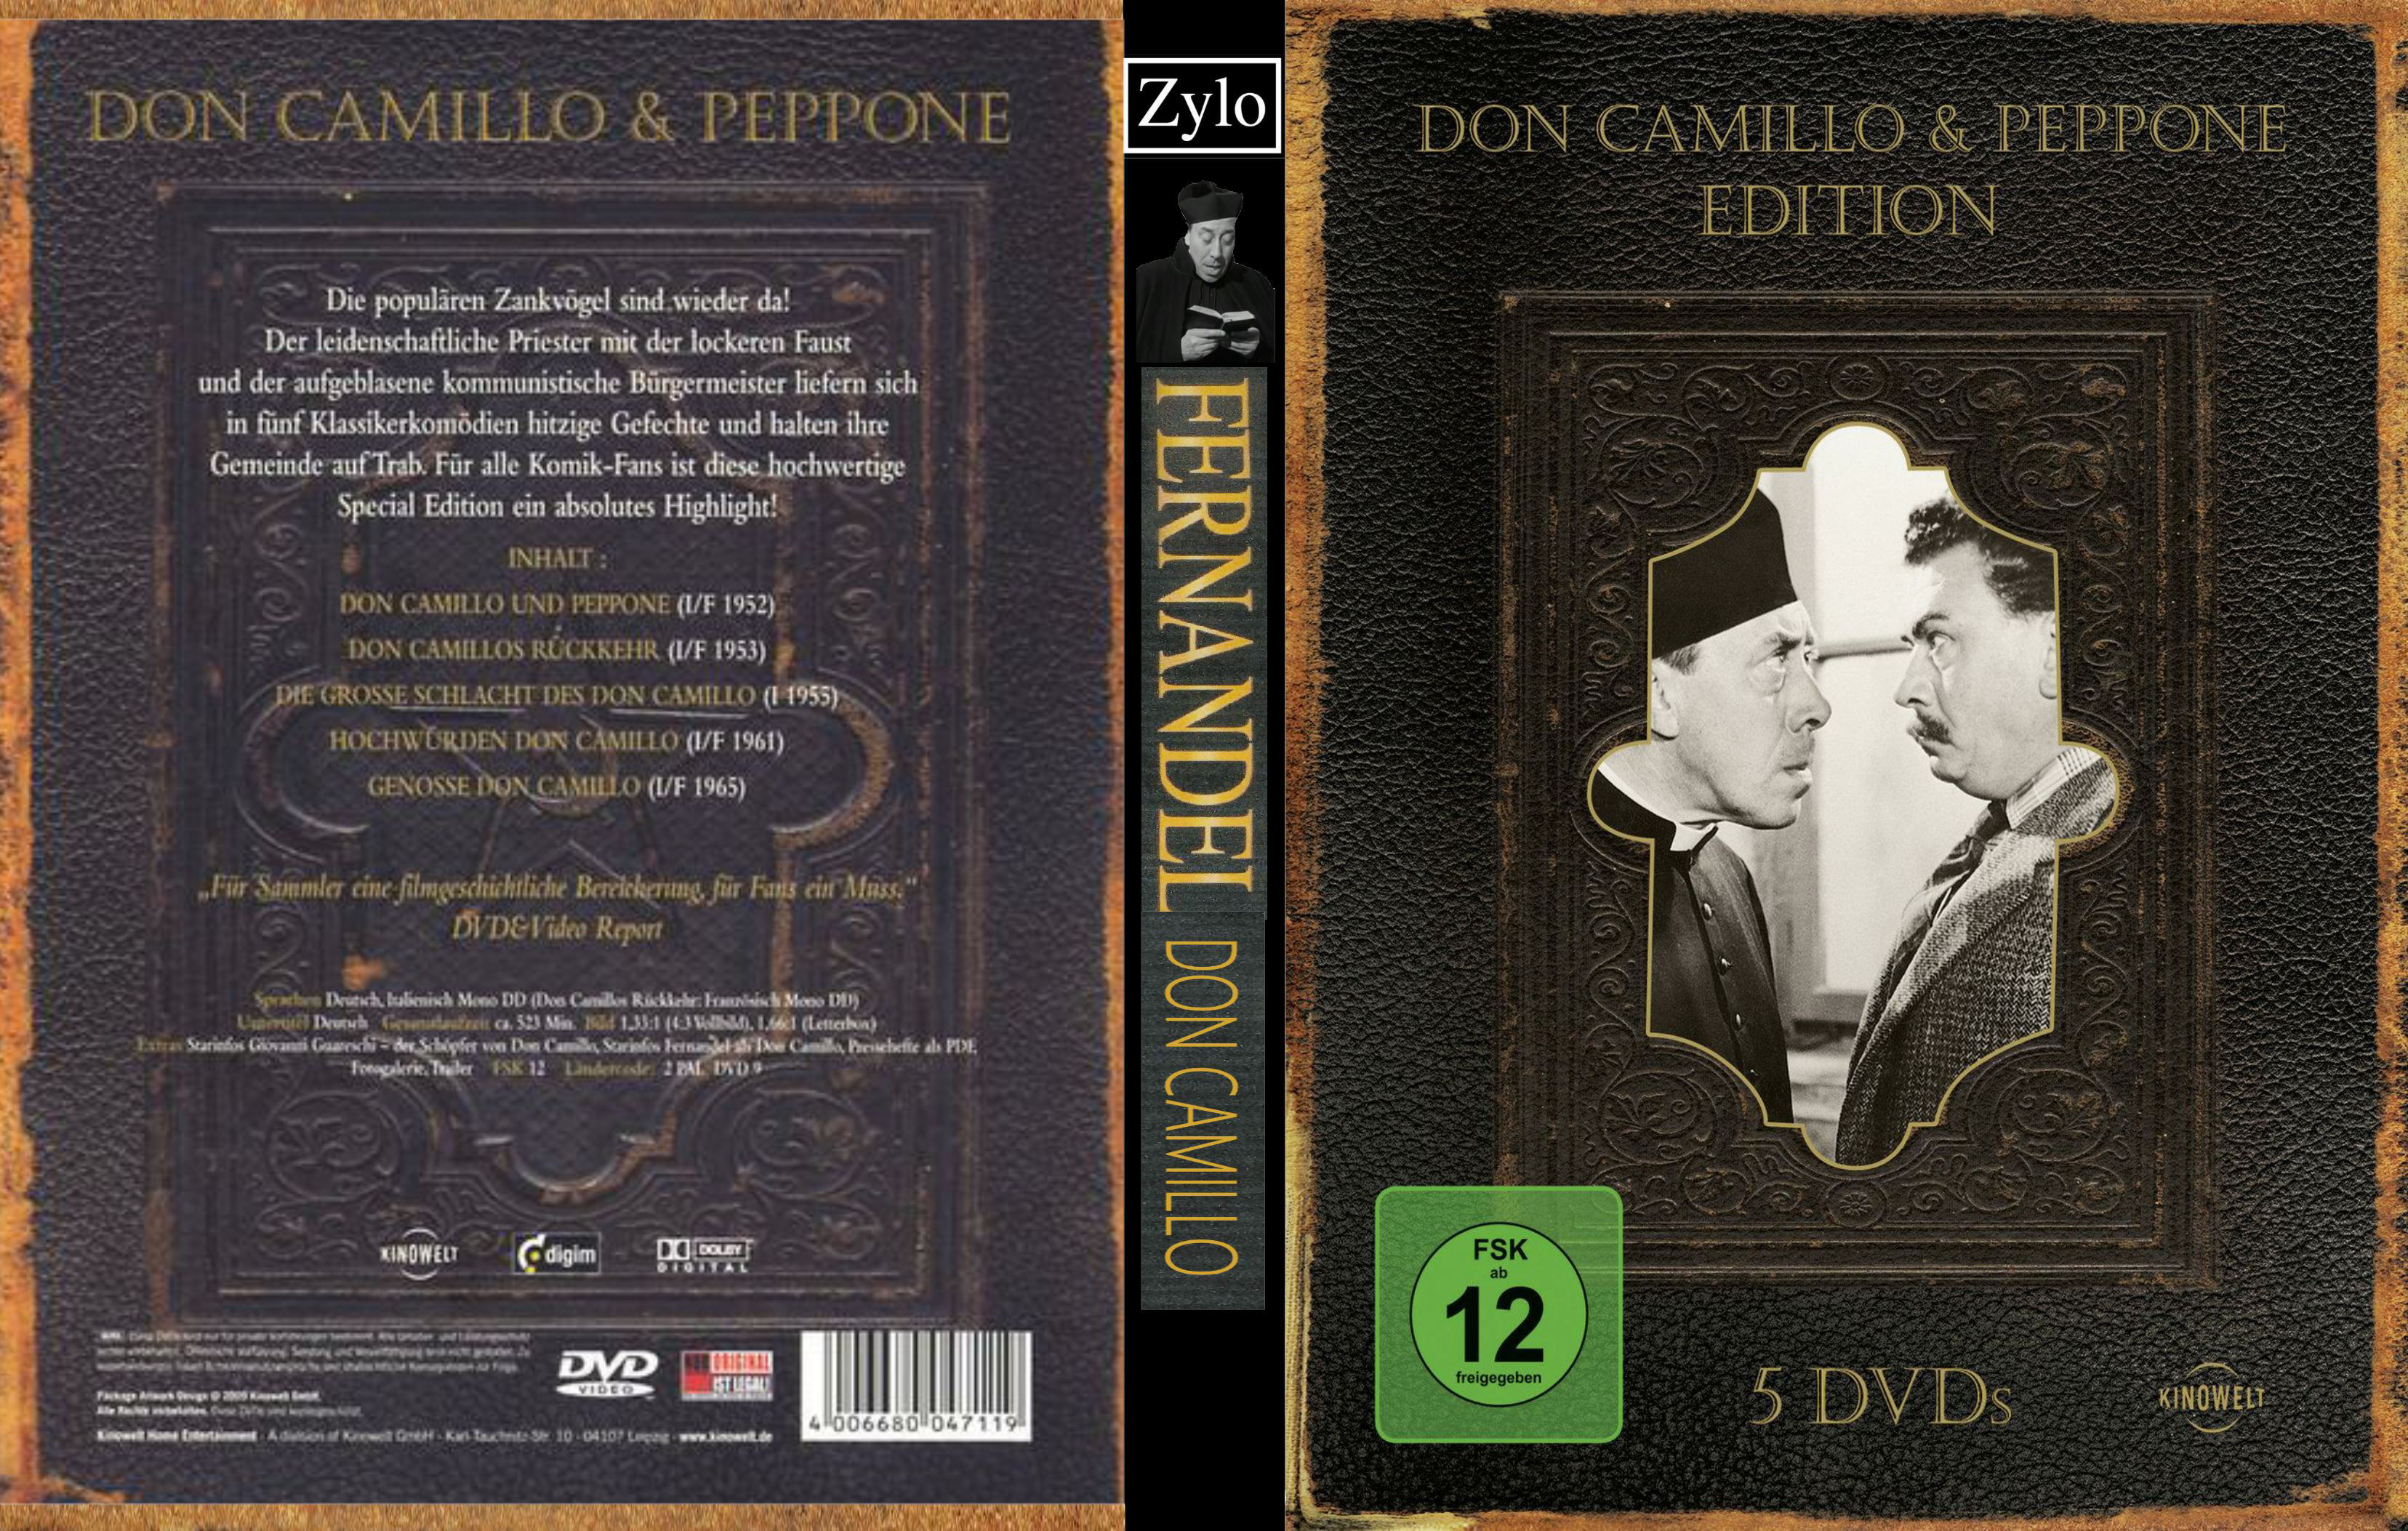 On Camillo & Peppone (5 DvD's - DvD 4